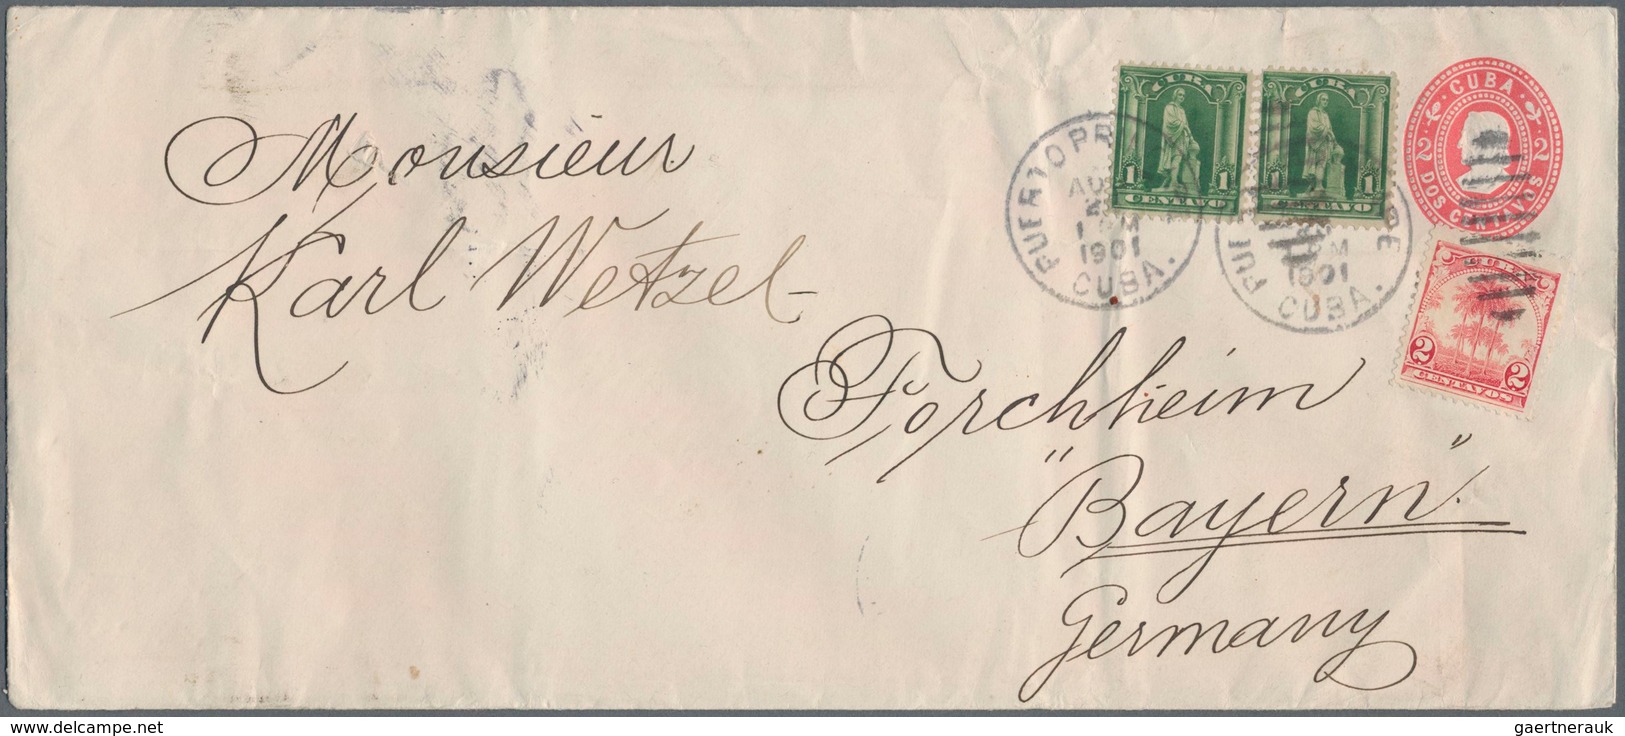 Cuba: 1899, Spanish American War : Columbus eight different postal stationery envelopes (one surchar